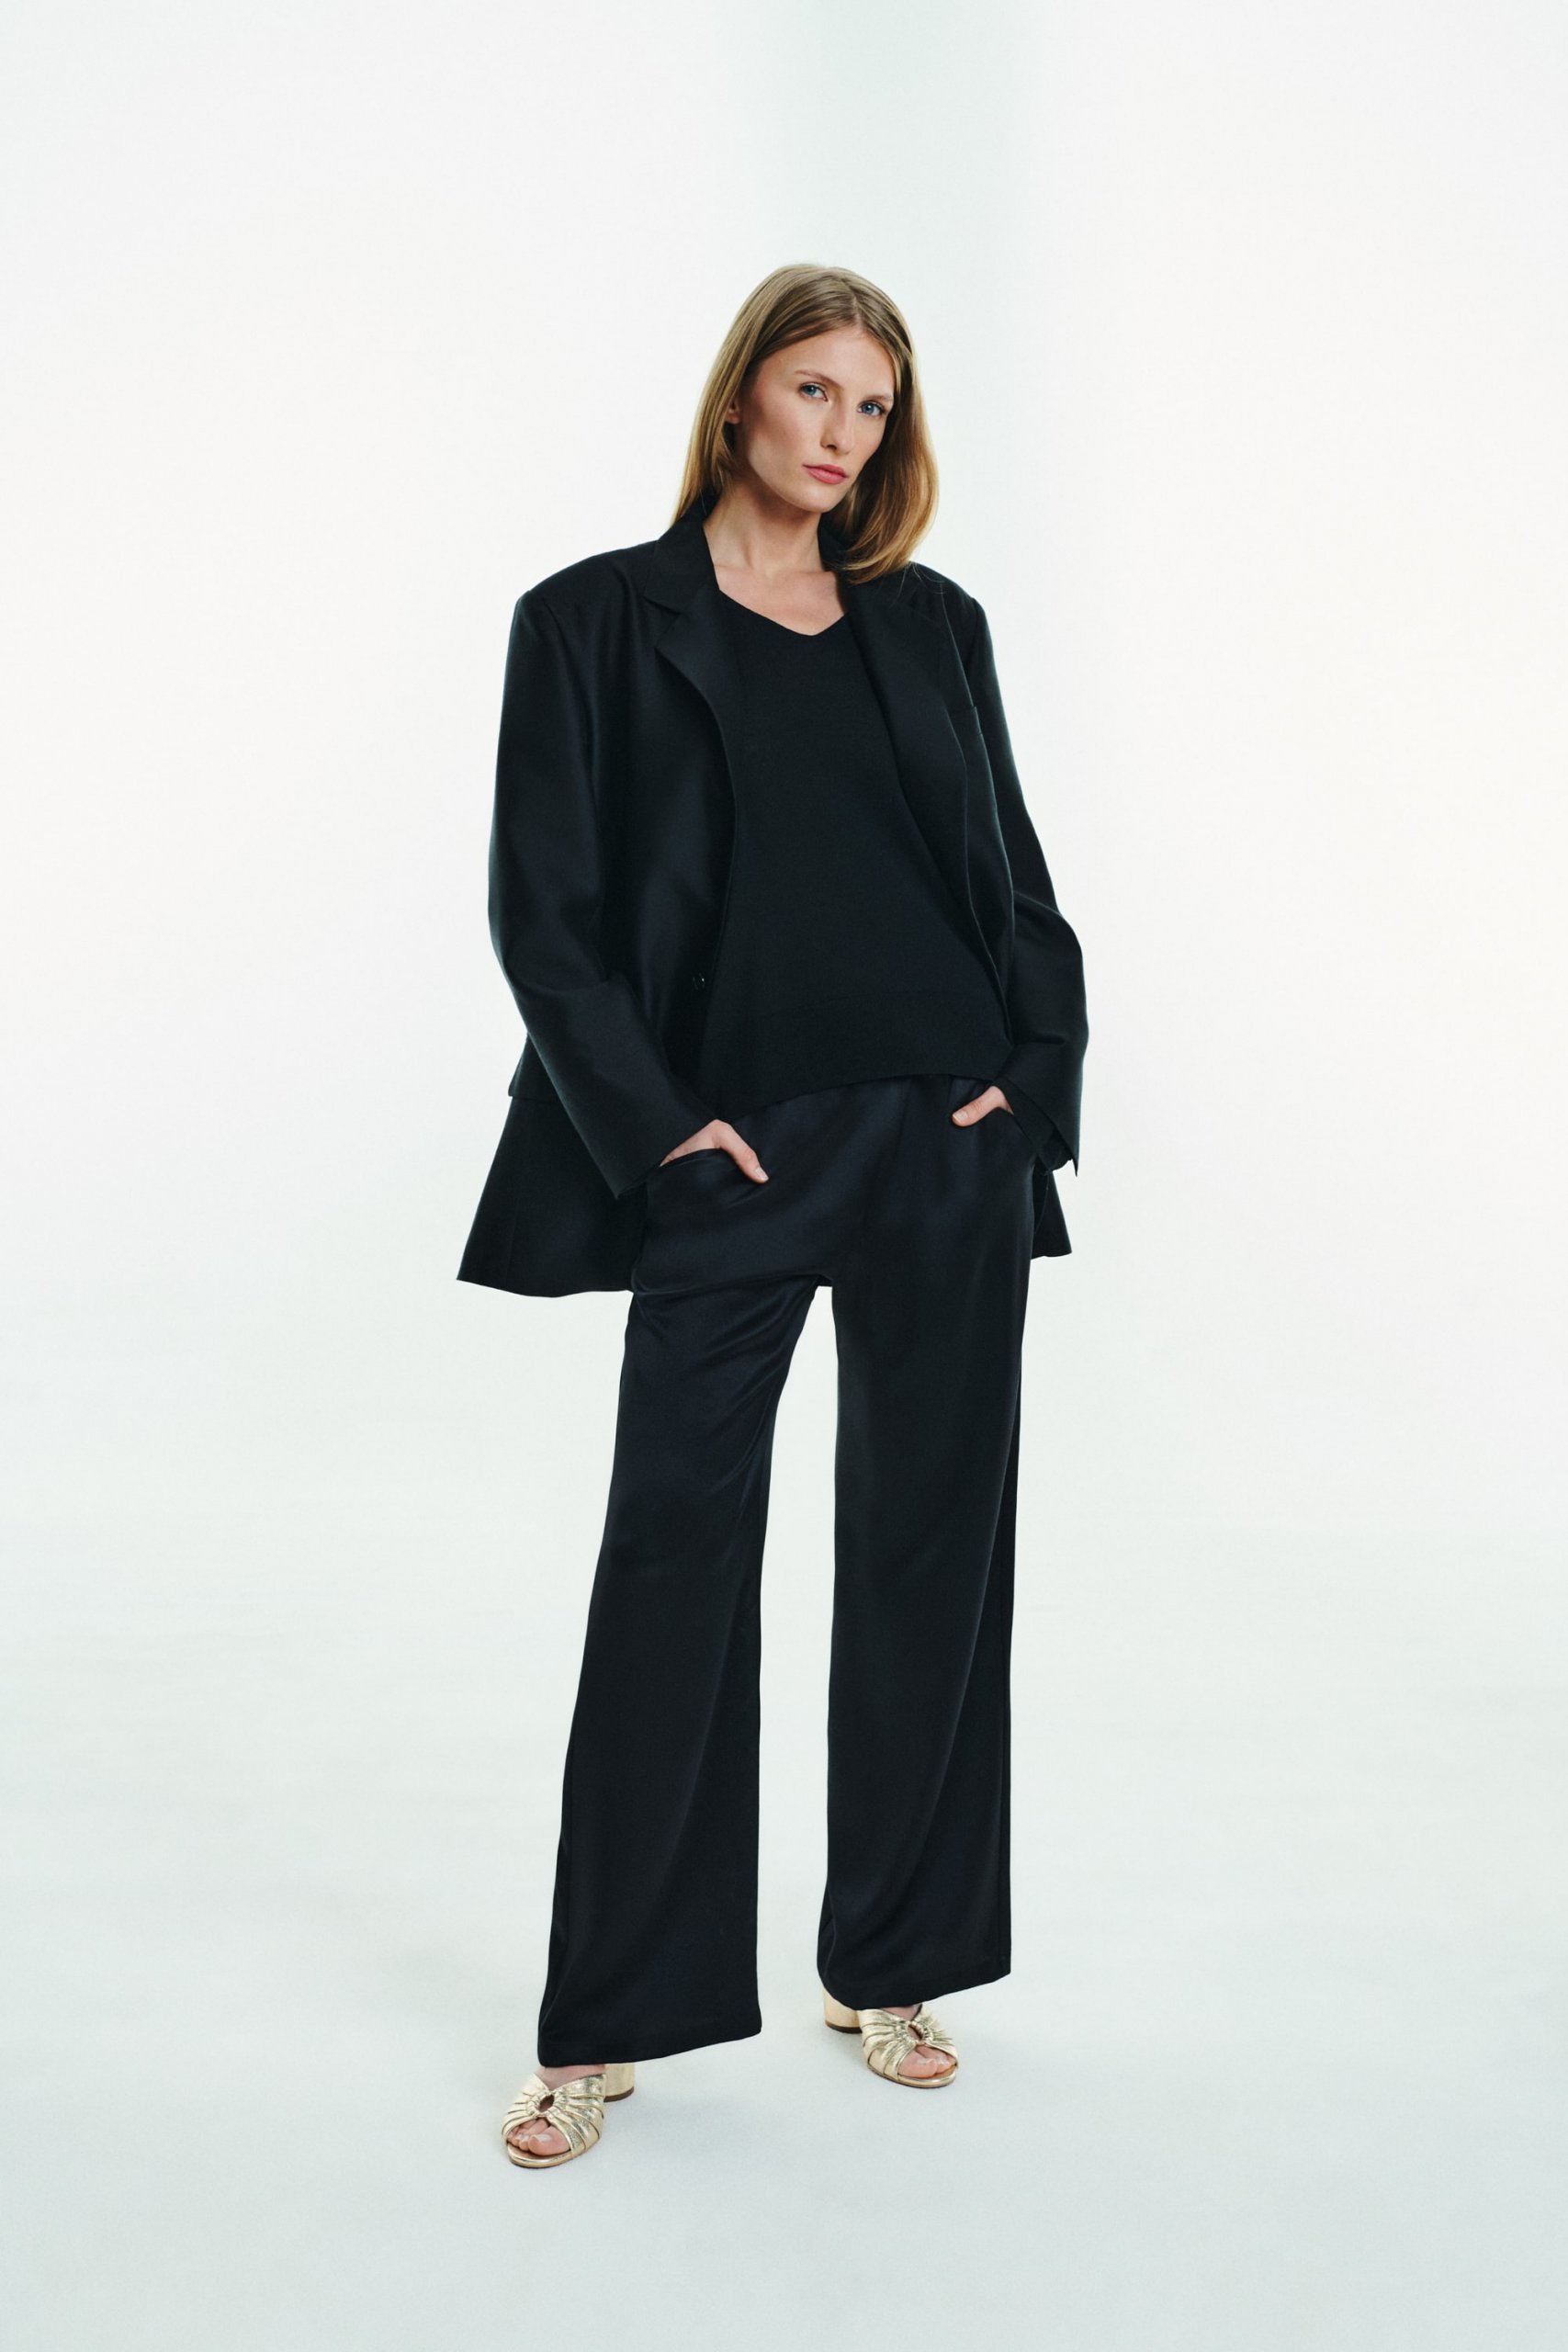 Silk Jersey Oversize Jumper in black